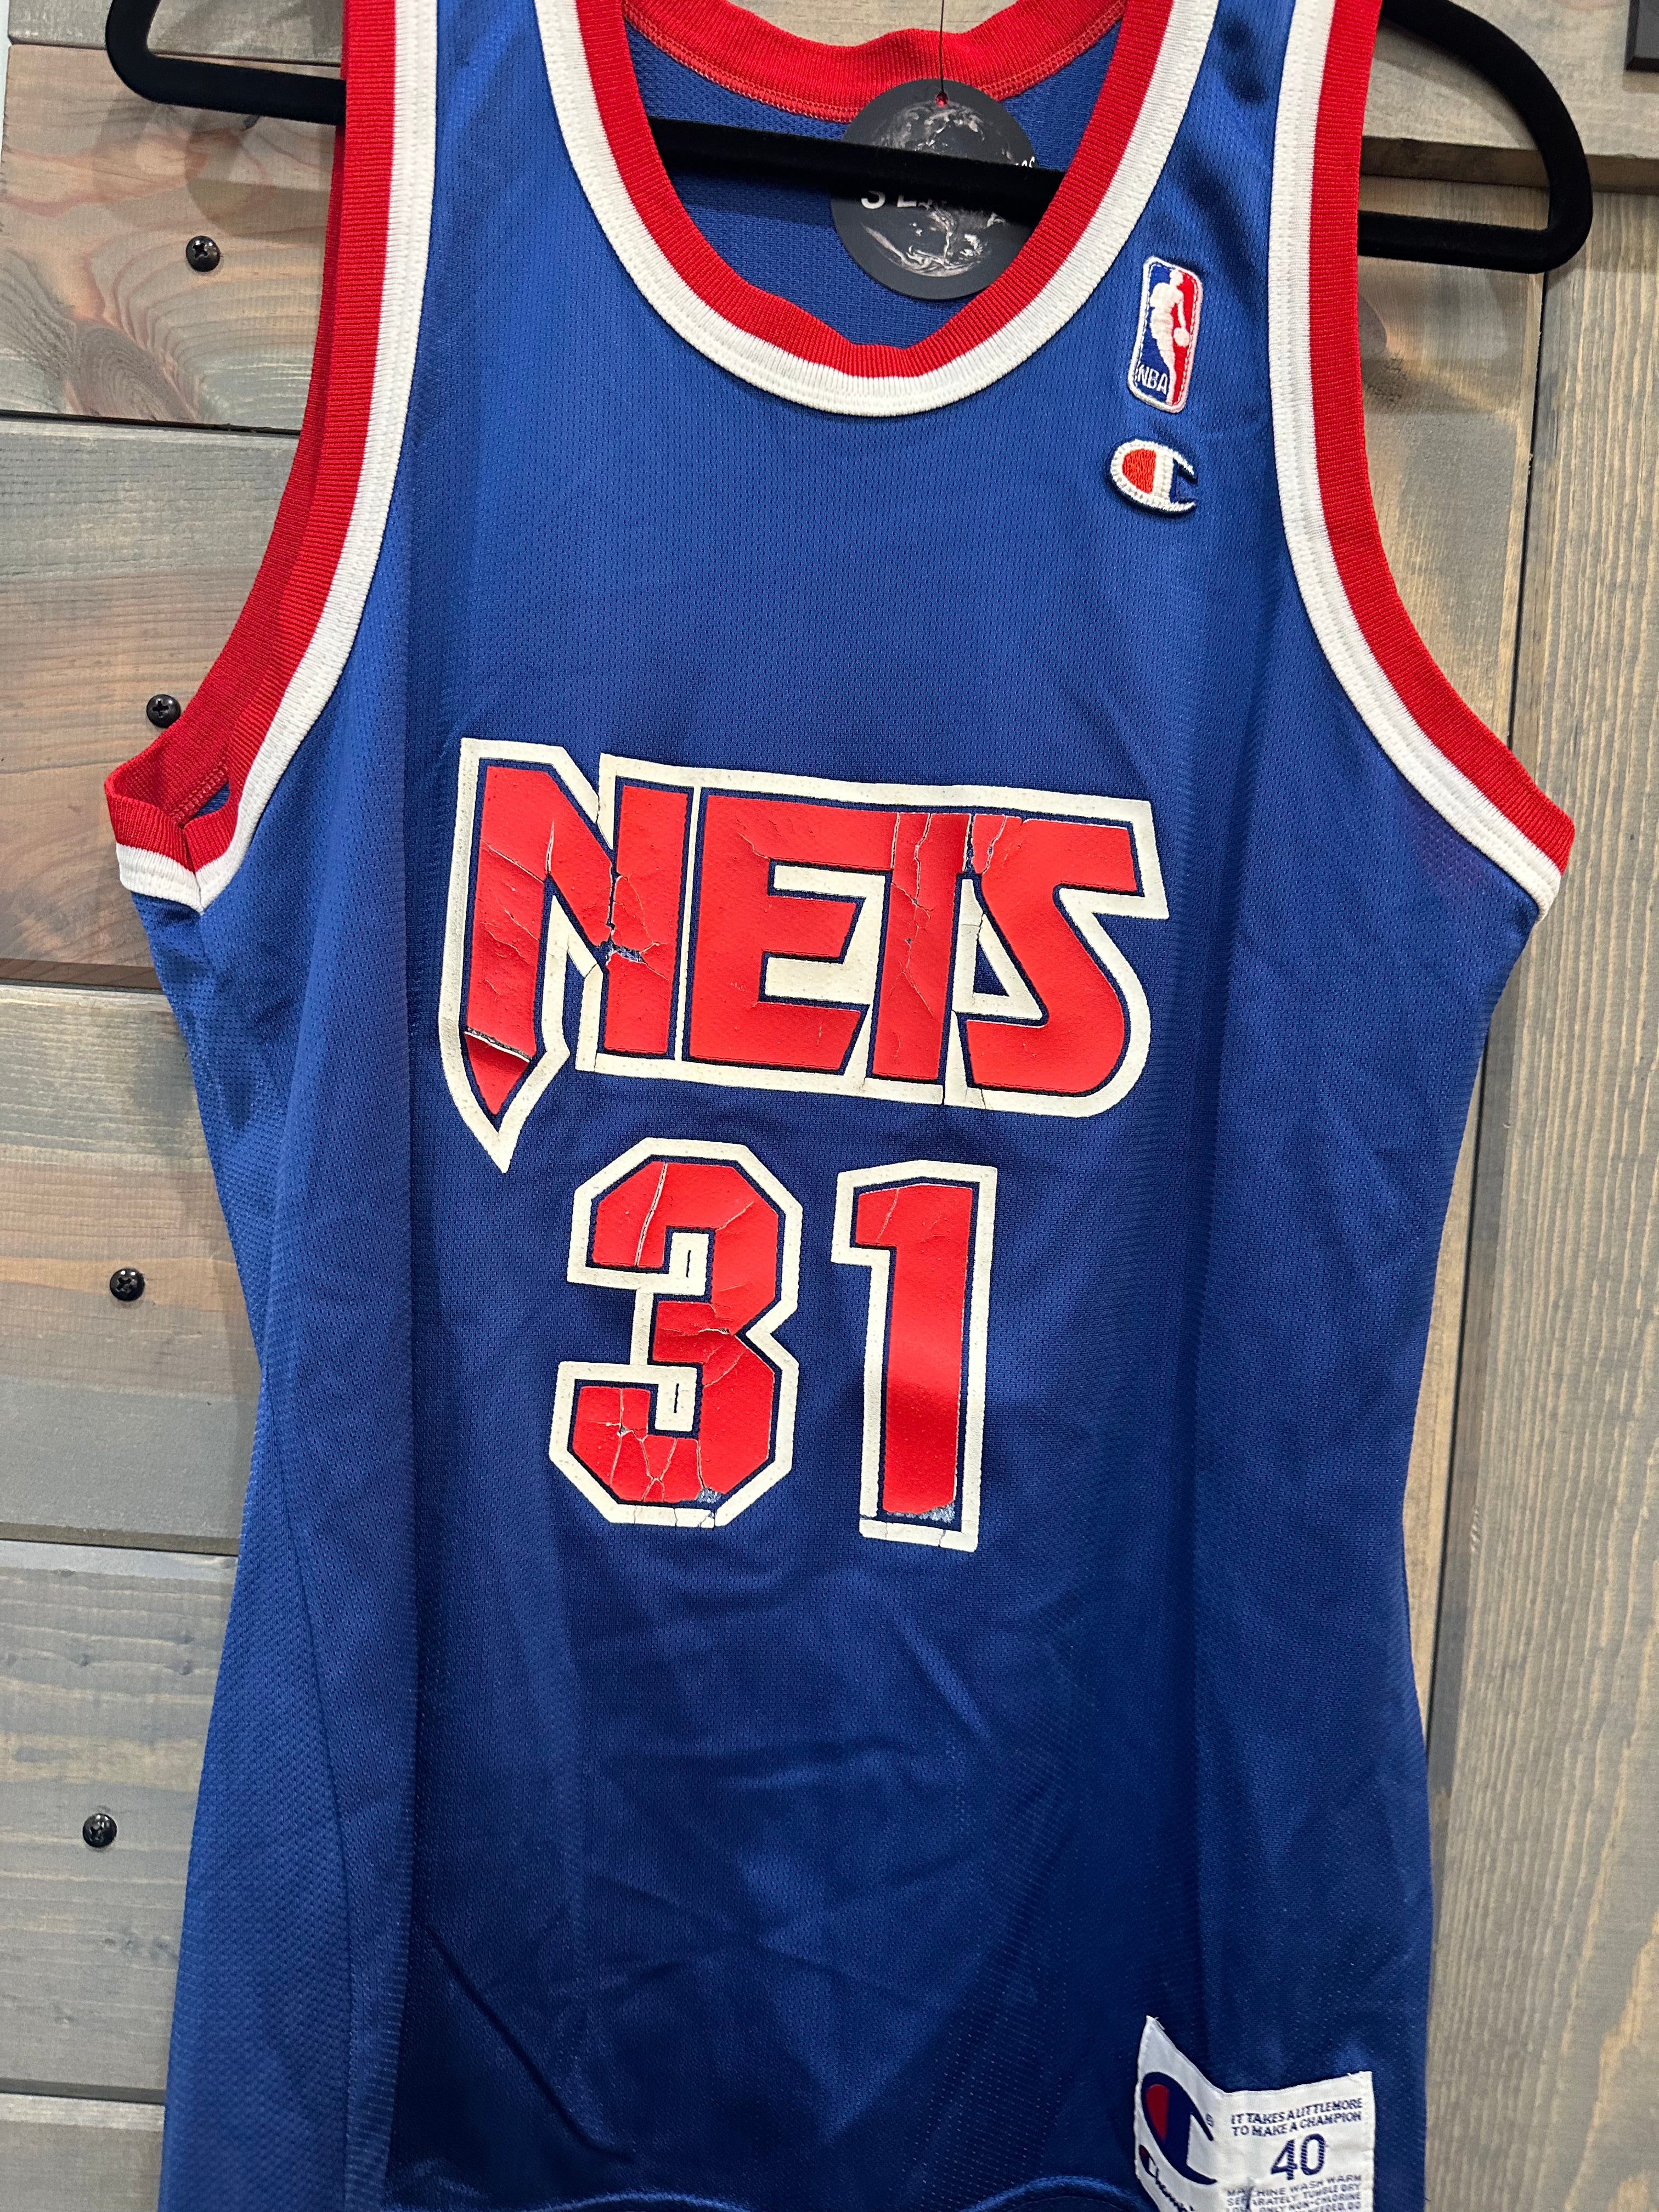 Brooklyn Nets Ed O'Bannon Jersey